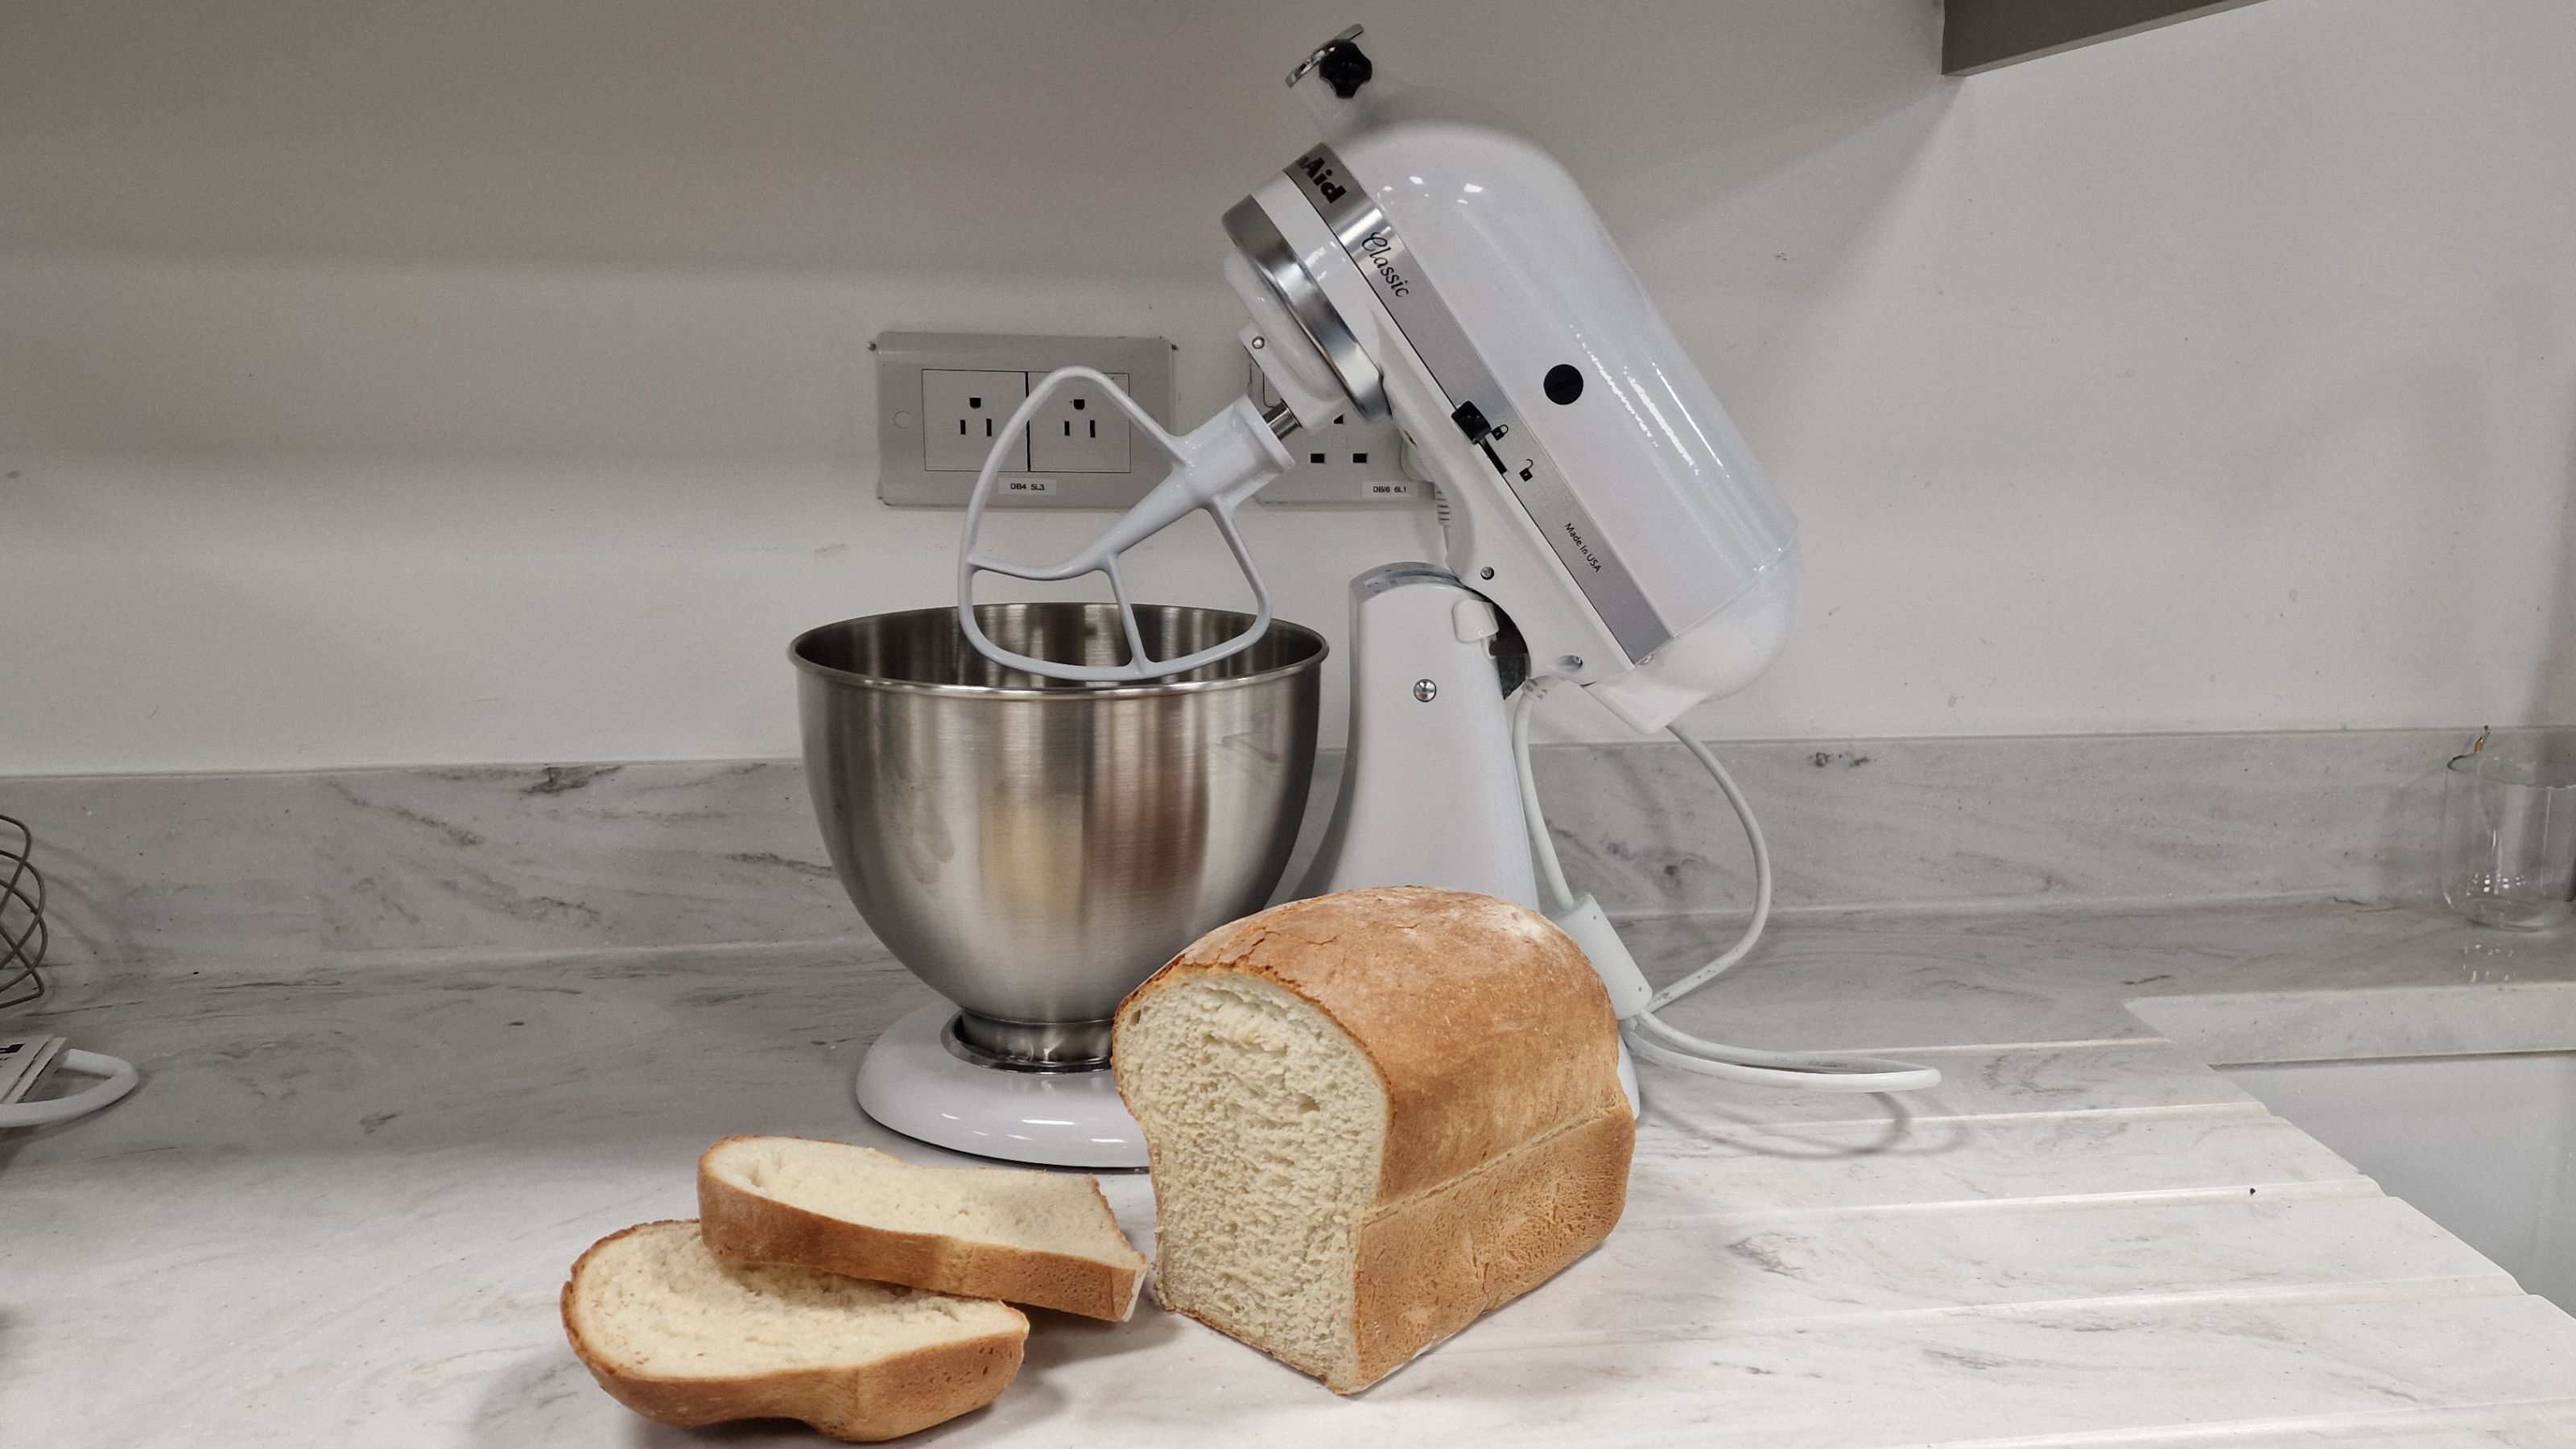 KitchenAid Artisan Series Stand Mixer Review: The Standard